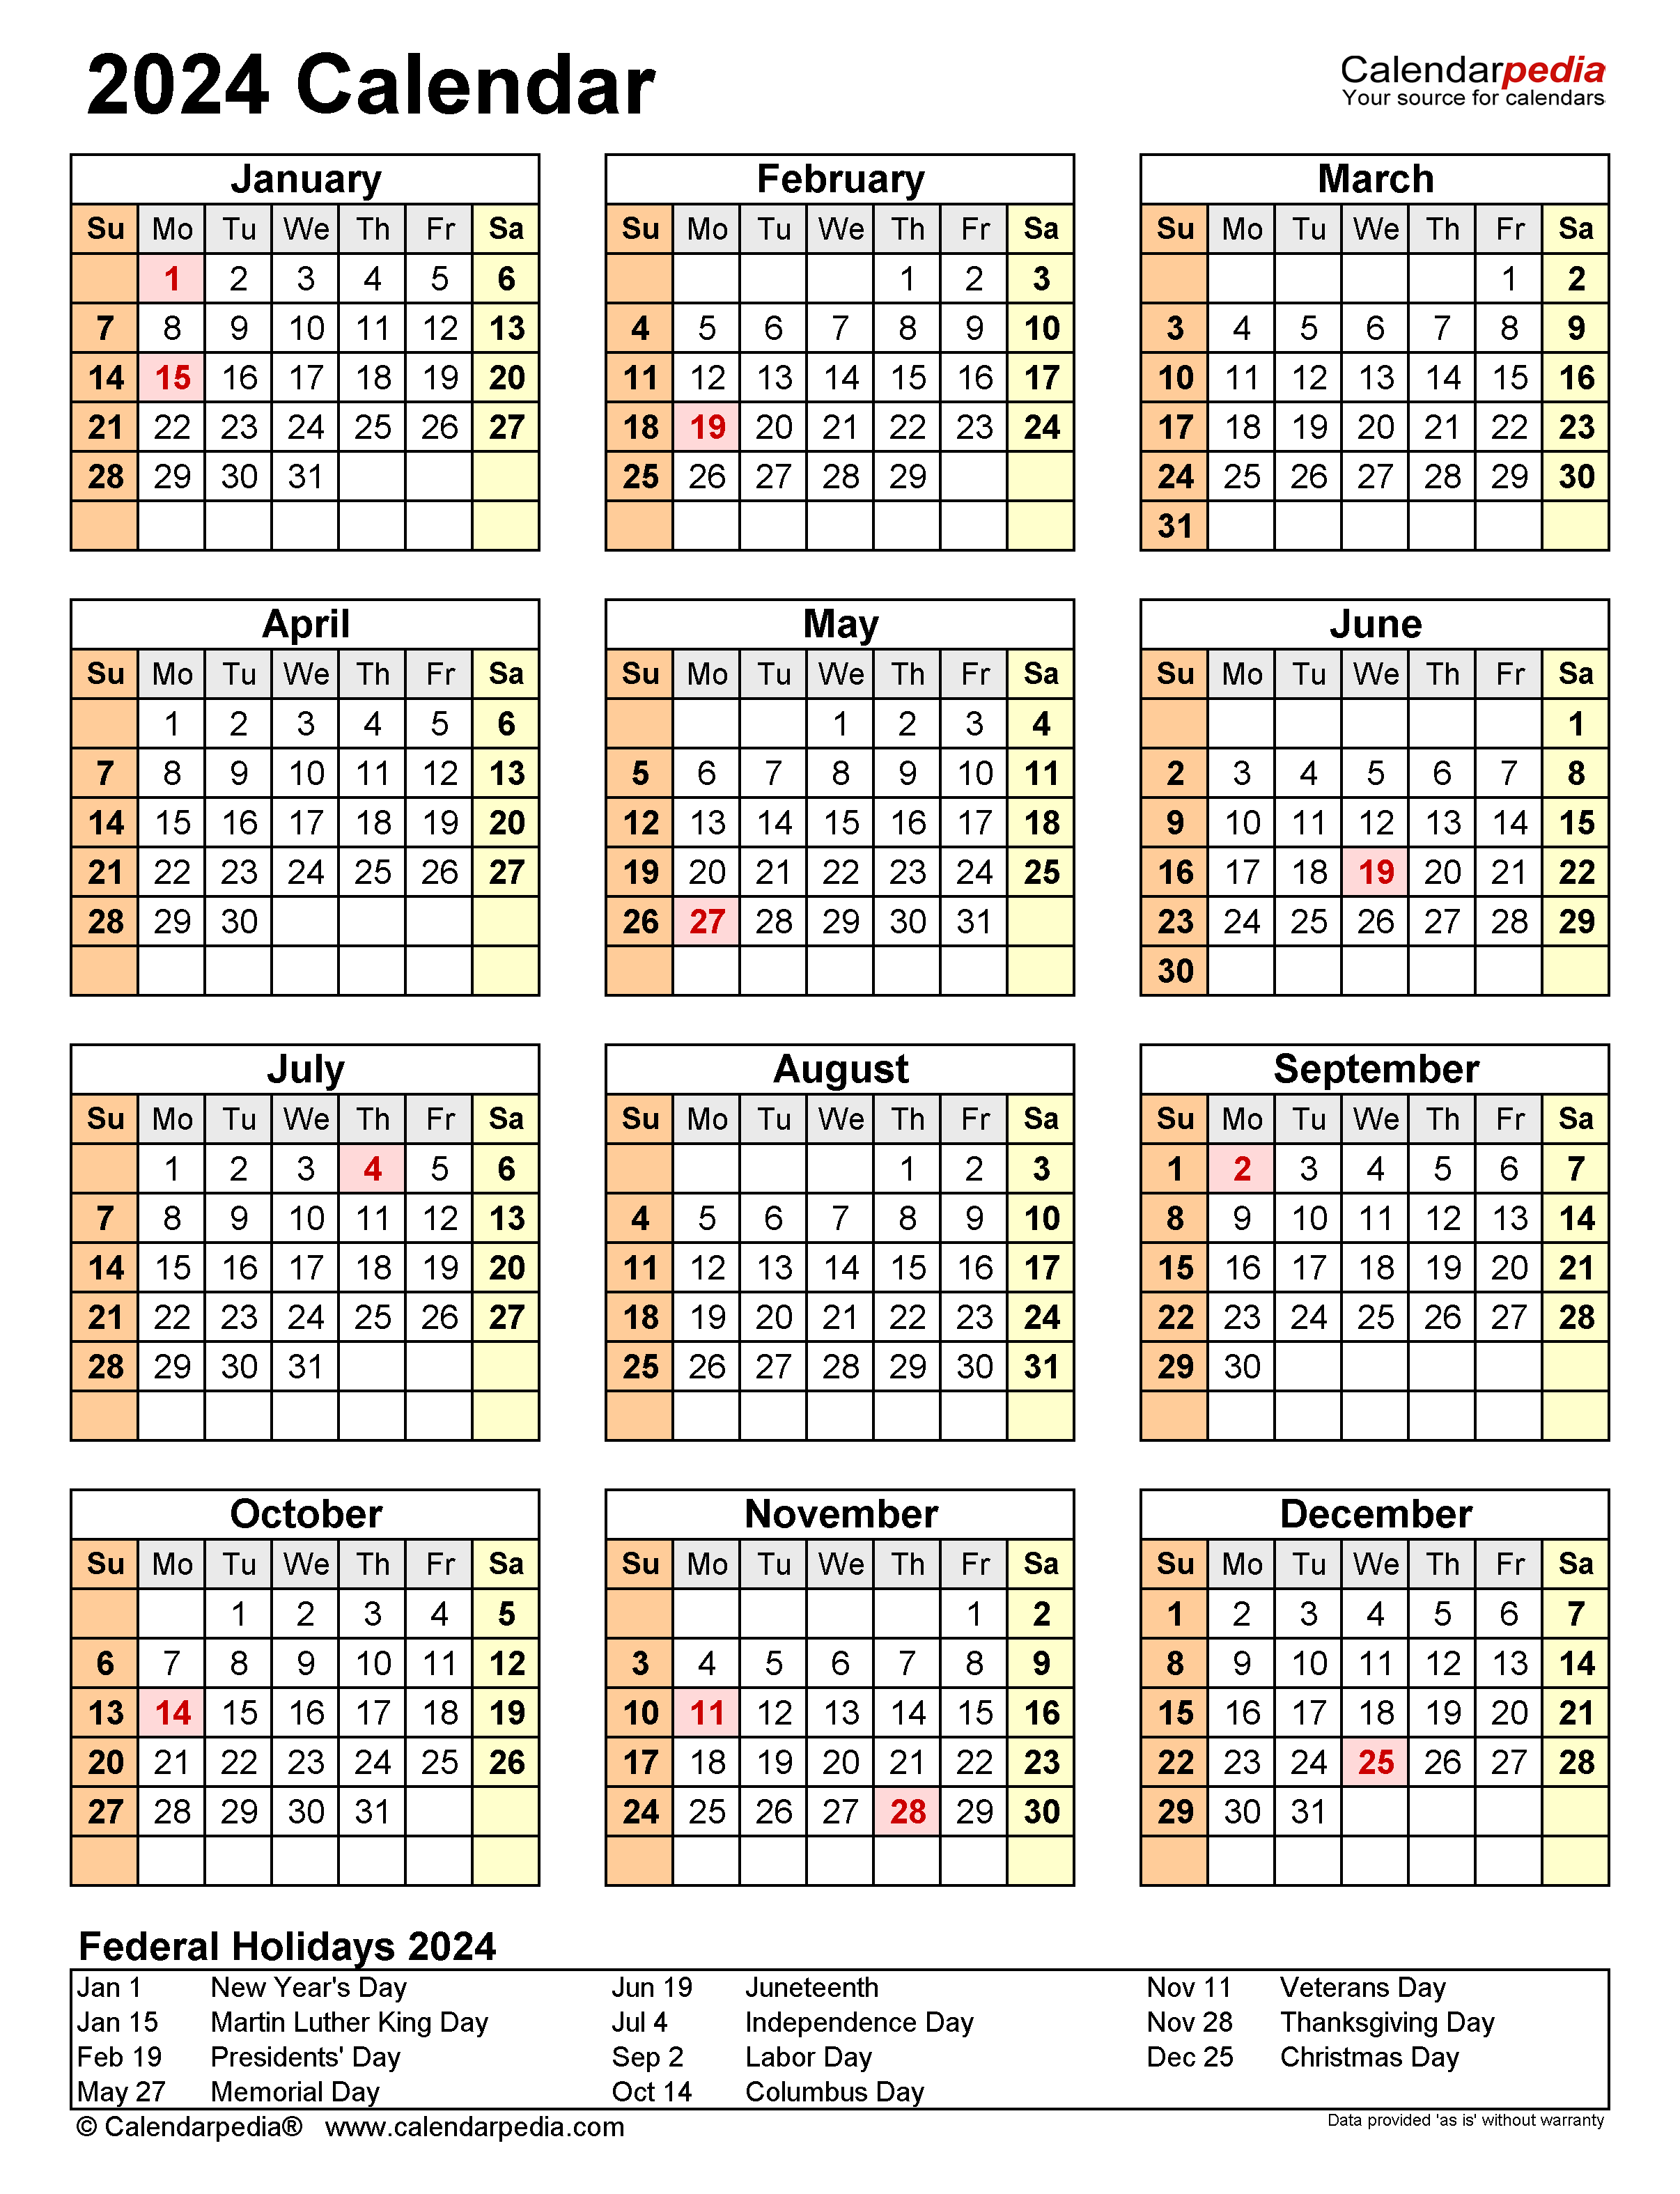 Free Printable 2024 Calendar With Holidays Crownflourmills - Free Printable 2024 Calendar With Holidays Usa